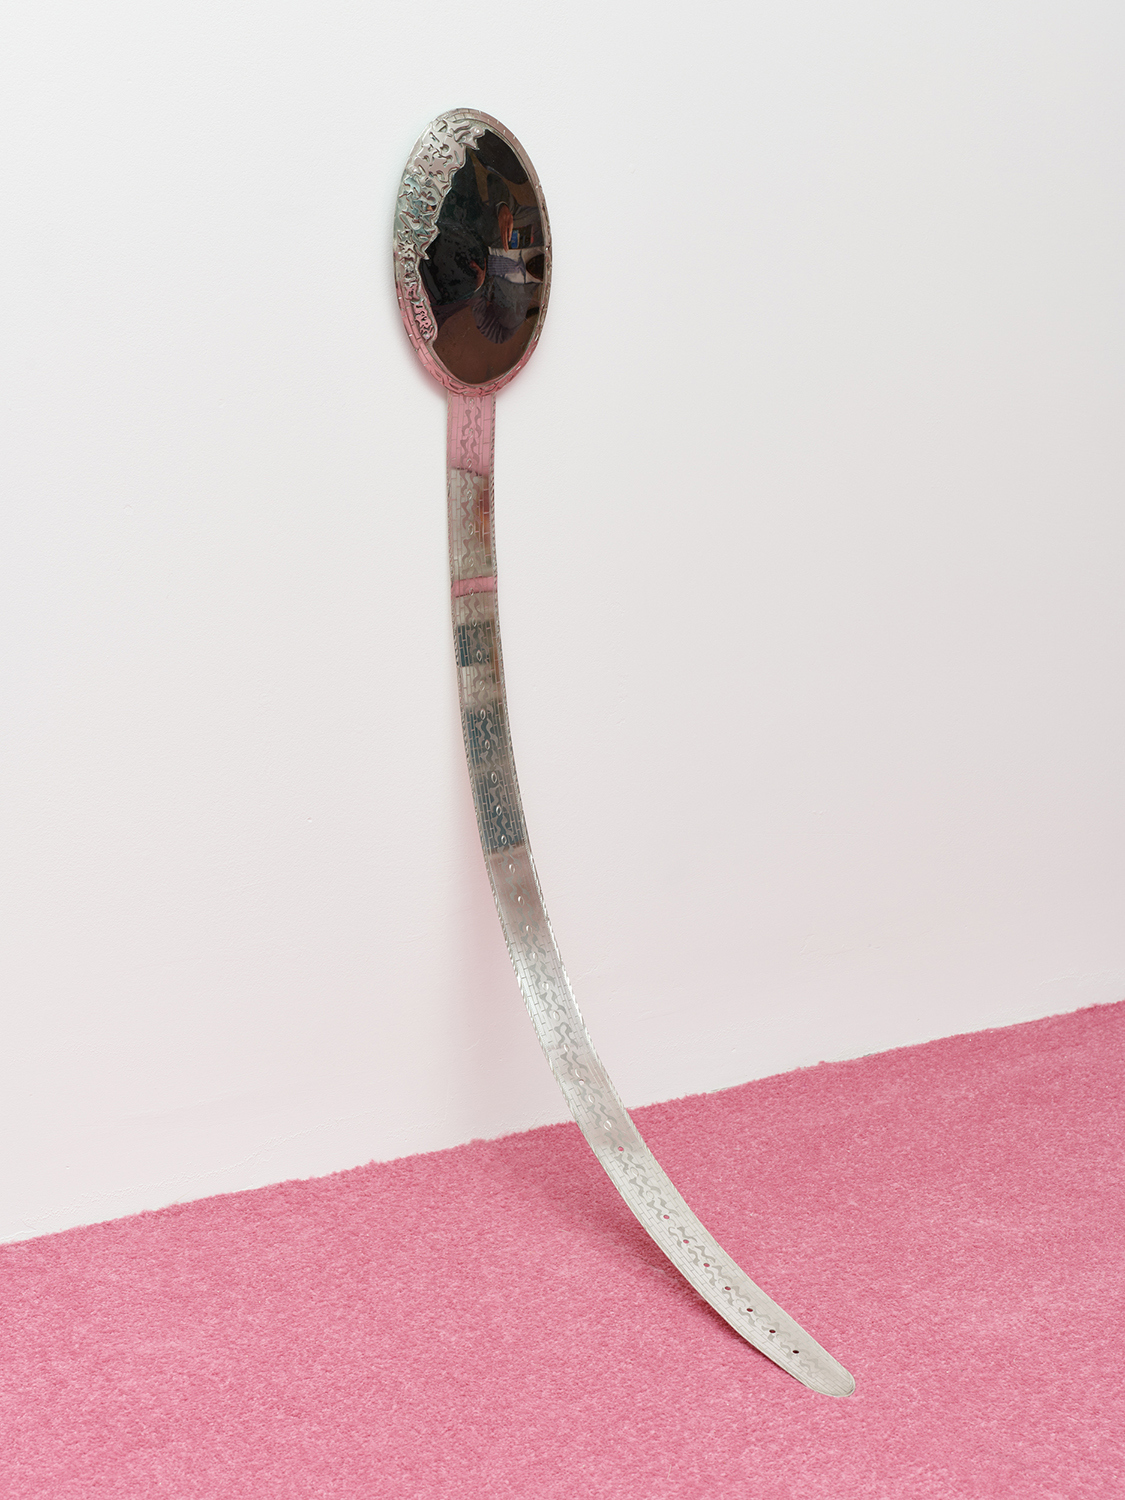 Arlette, XXXL Buckle Belt, 2022, Silver, resin coated photograph, 125 Ã— 17 Ã— 1.5cm